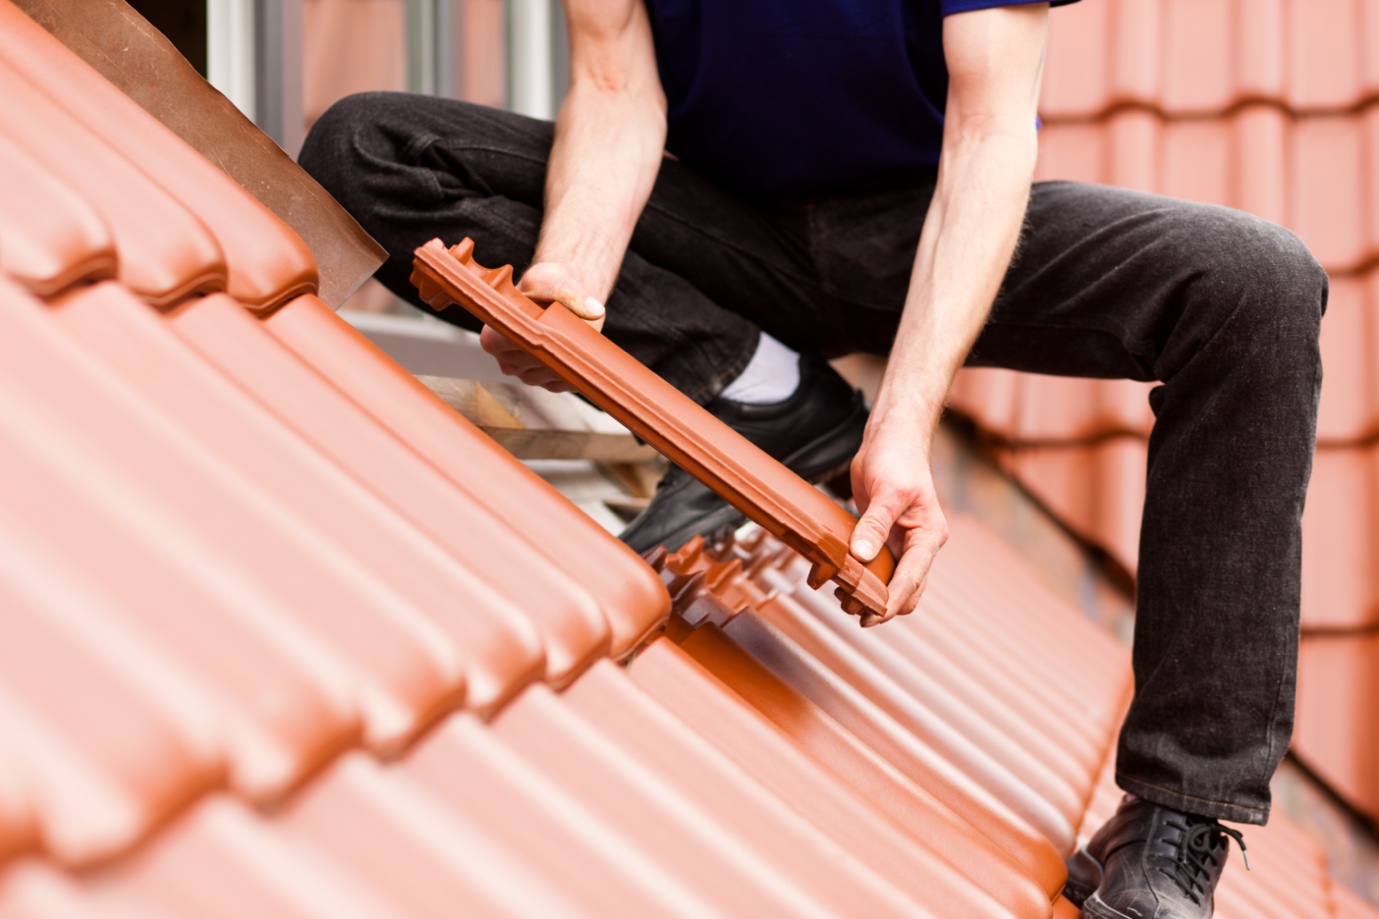 Westlake Village roof repair services in progress.